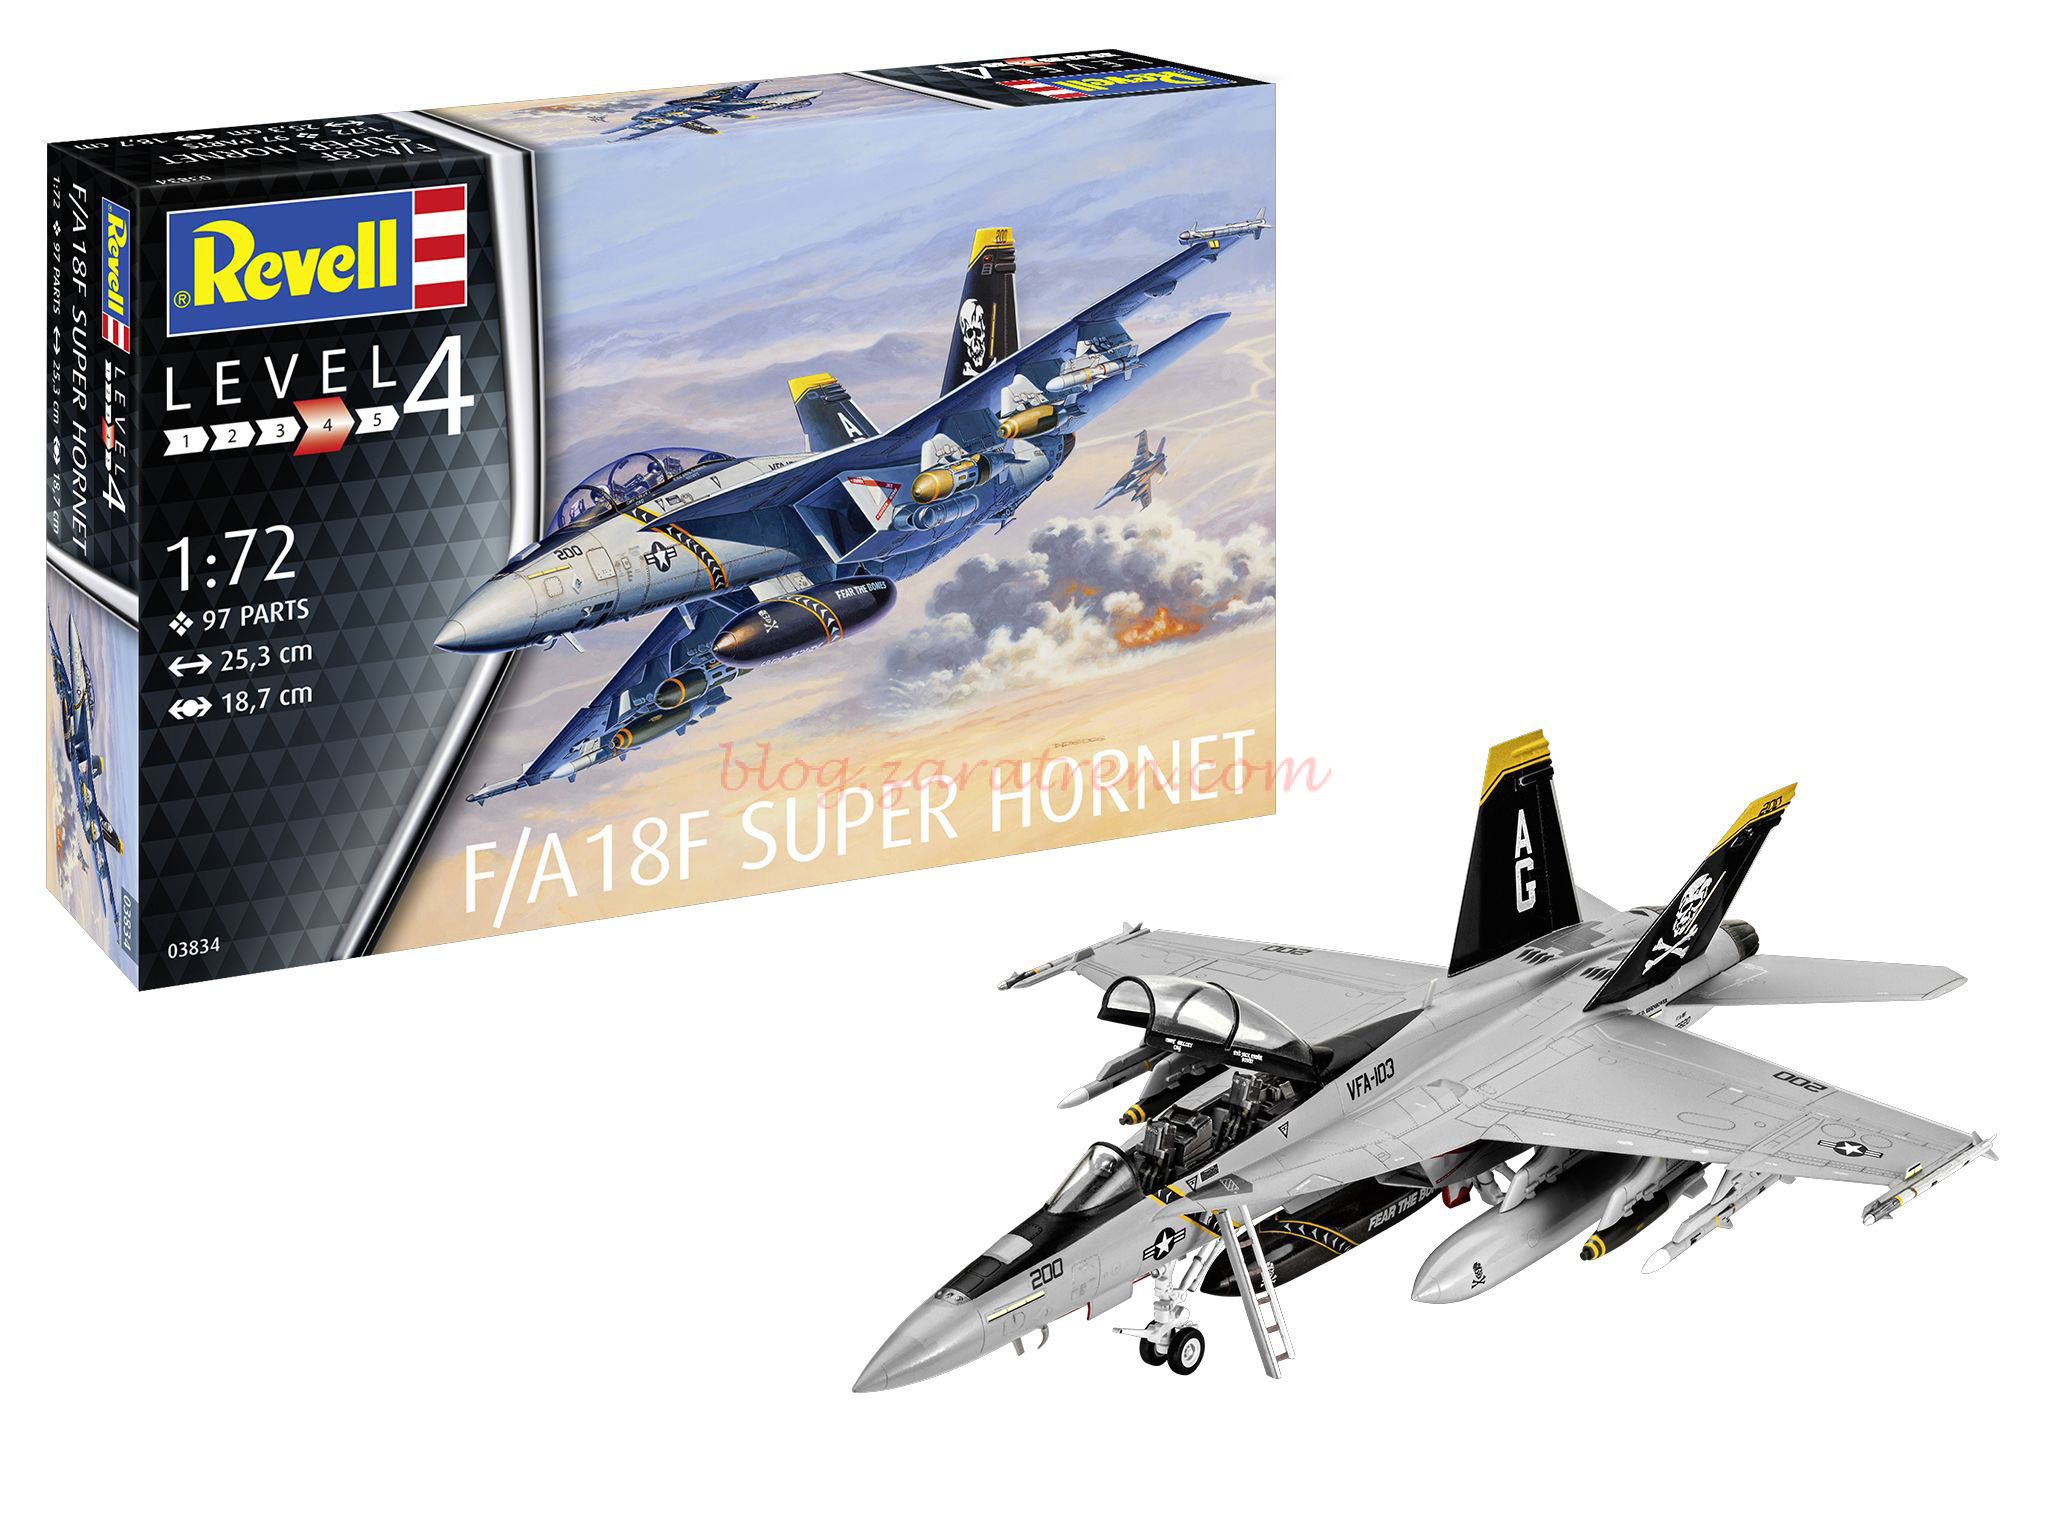 Revell – Avión F/A-18F Super Hornet, Escala 1:72, Ref: 63834